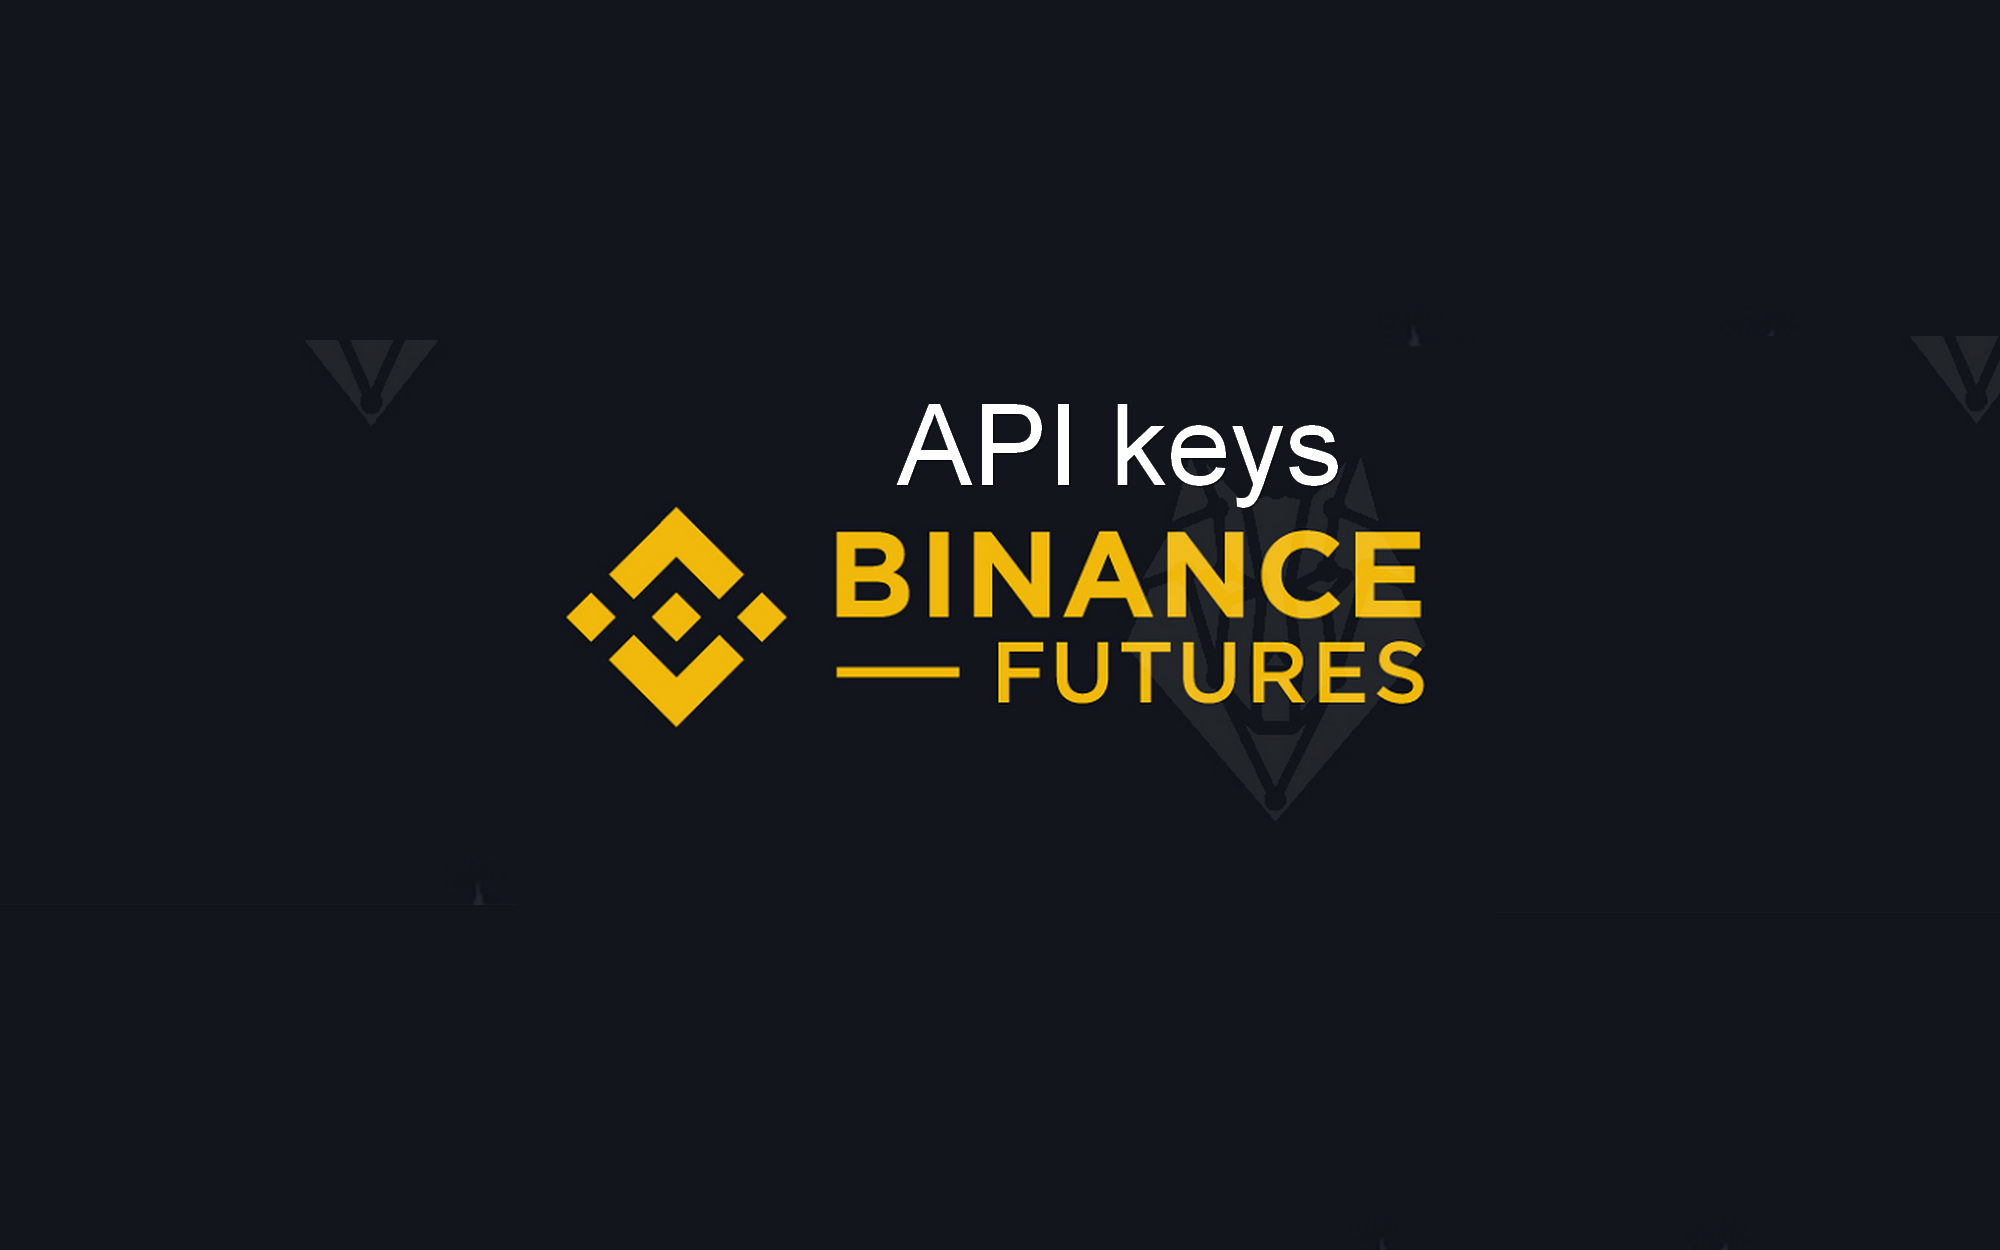 binance-futures-api-keys